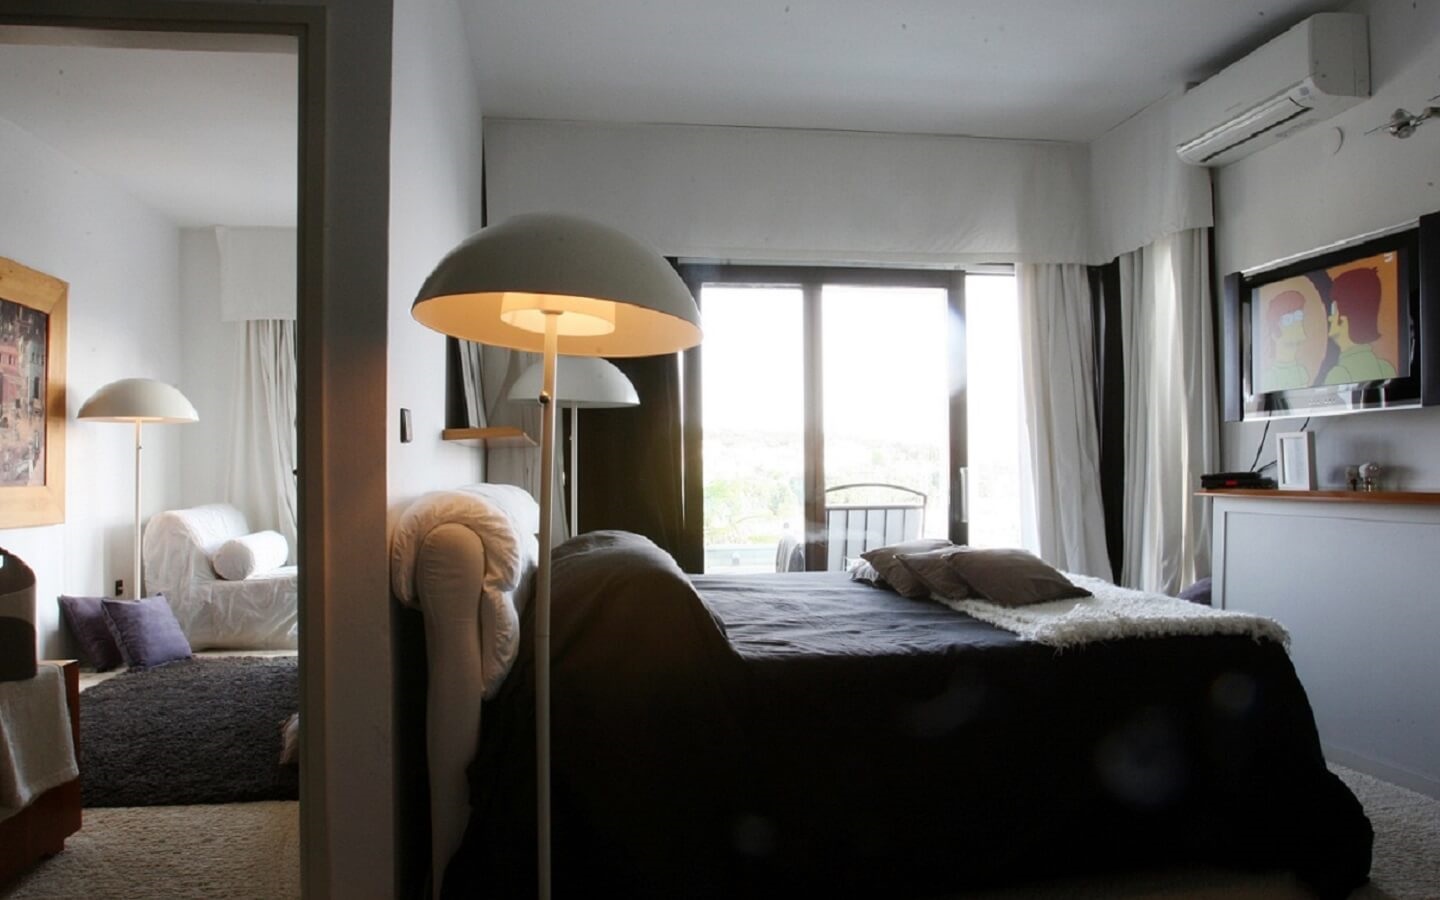 Design Hotel Valsabbion, direkt am Meer bei Pula, Istrien, Kroatien.